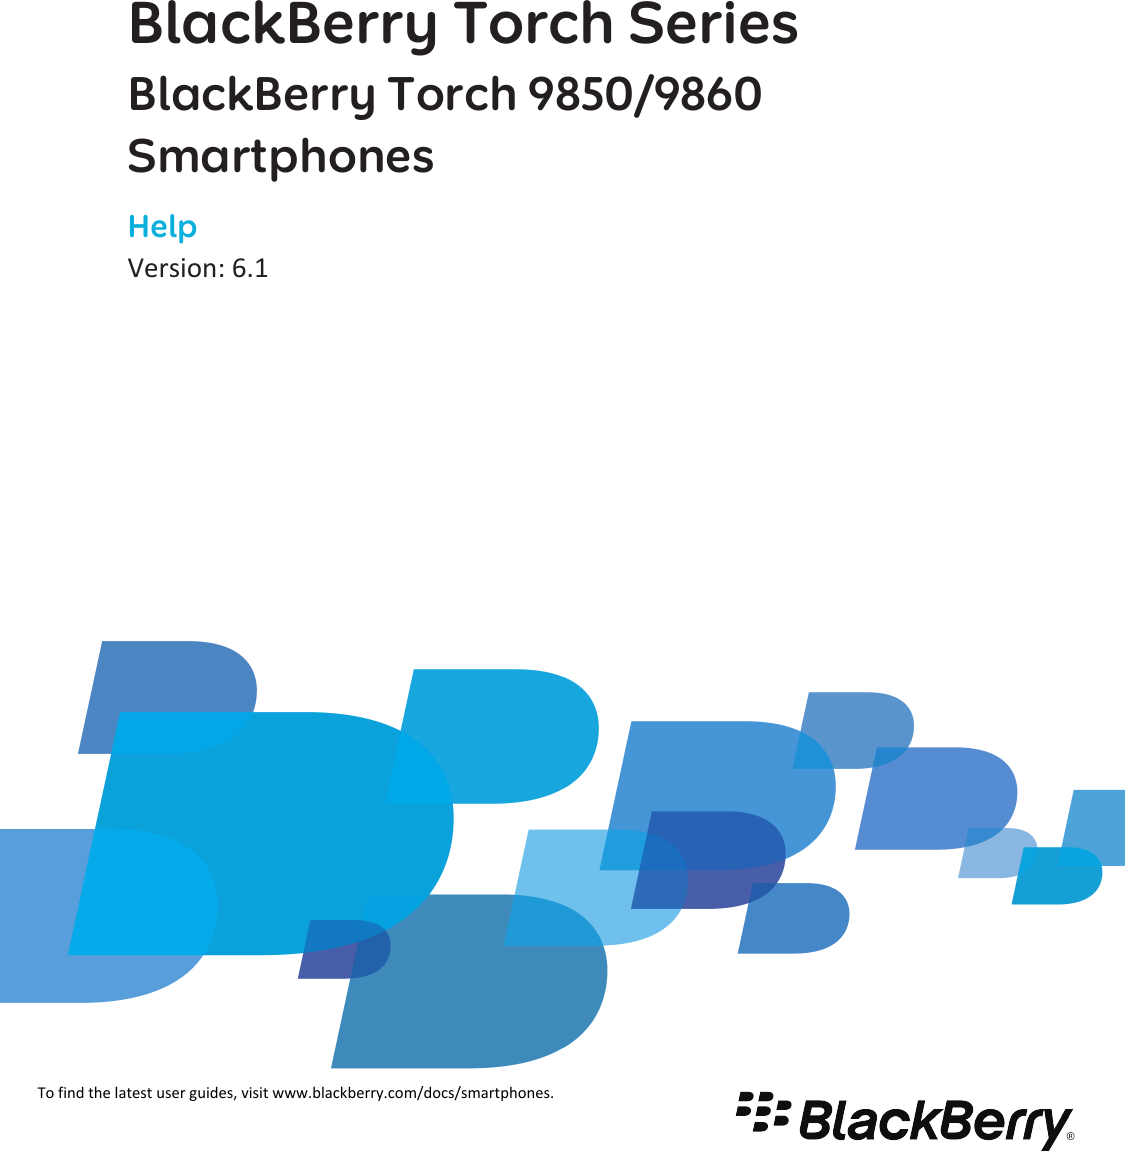 BlackBerry Torch SeriesBlackBerry Torch 9850/9860 SmartphonesHelpVersion: 6.1To find the latest user guides, visit www.blackberry.com/docs/smartphones.